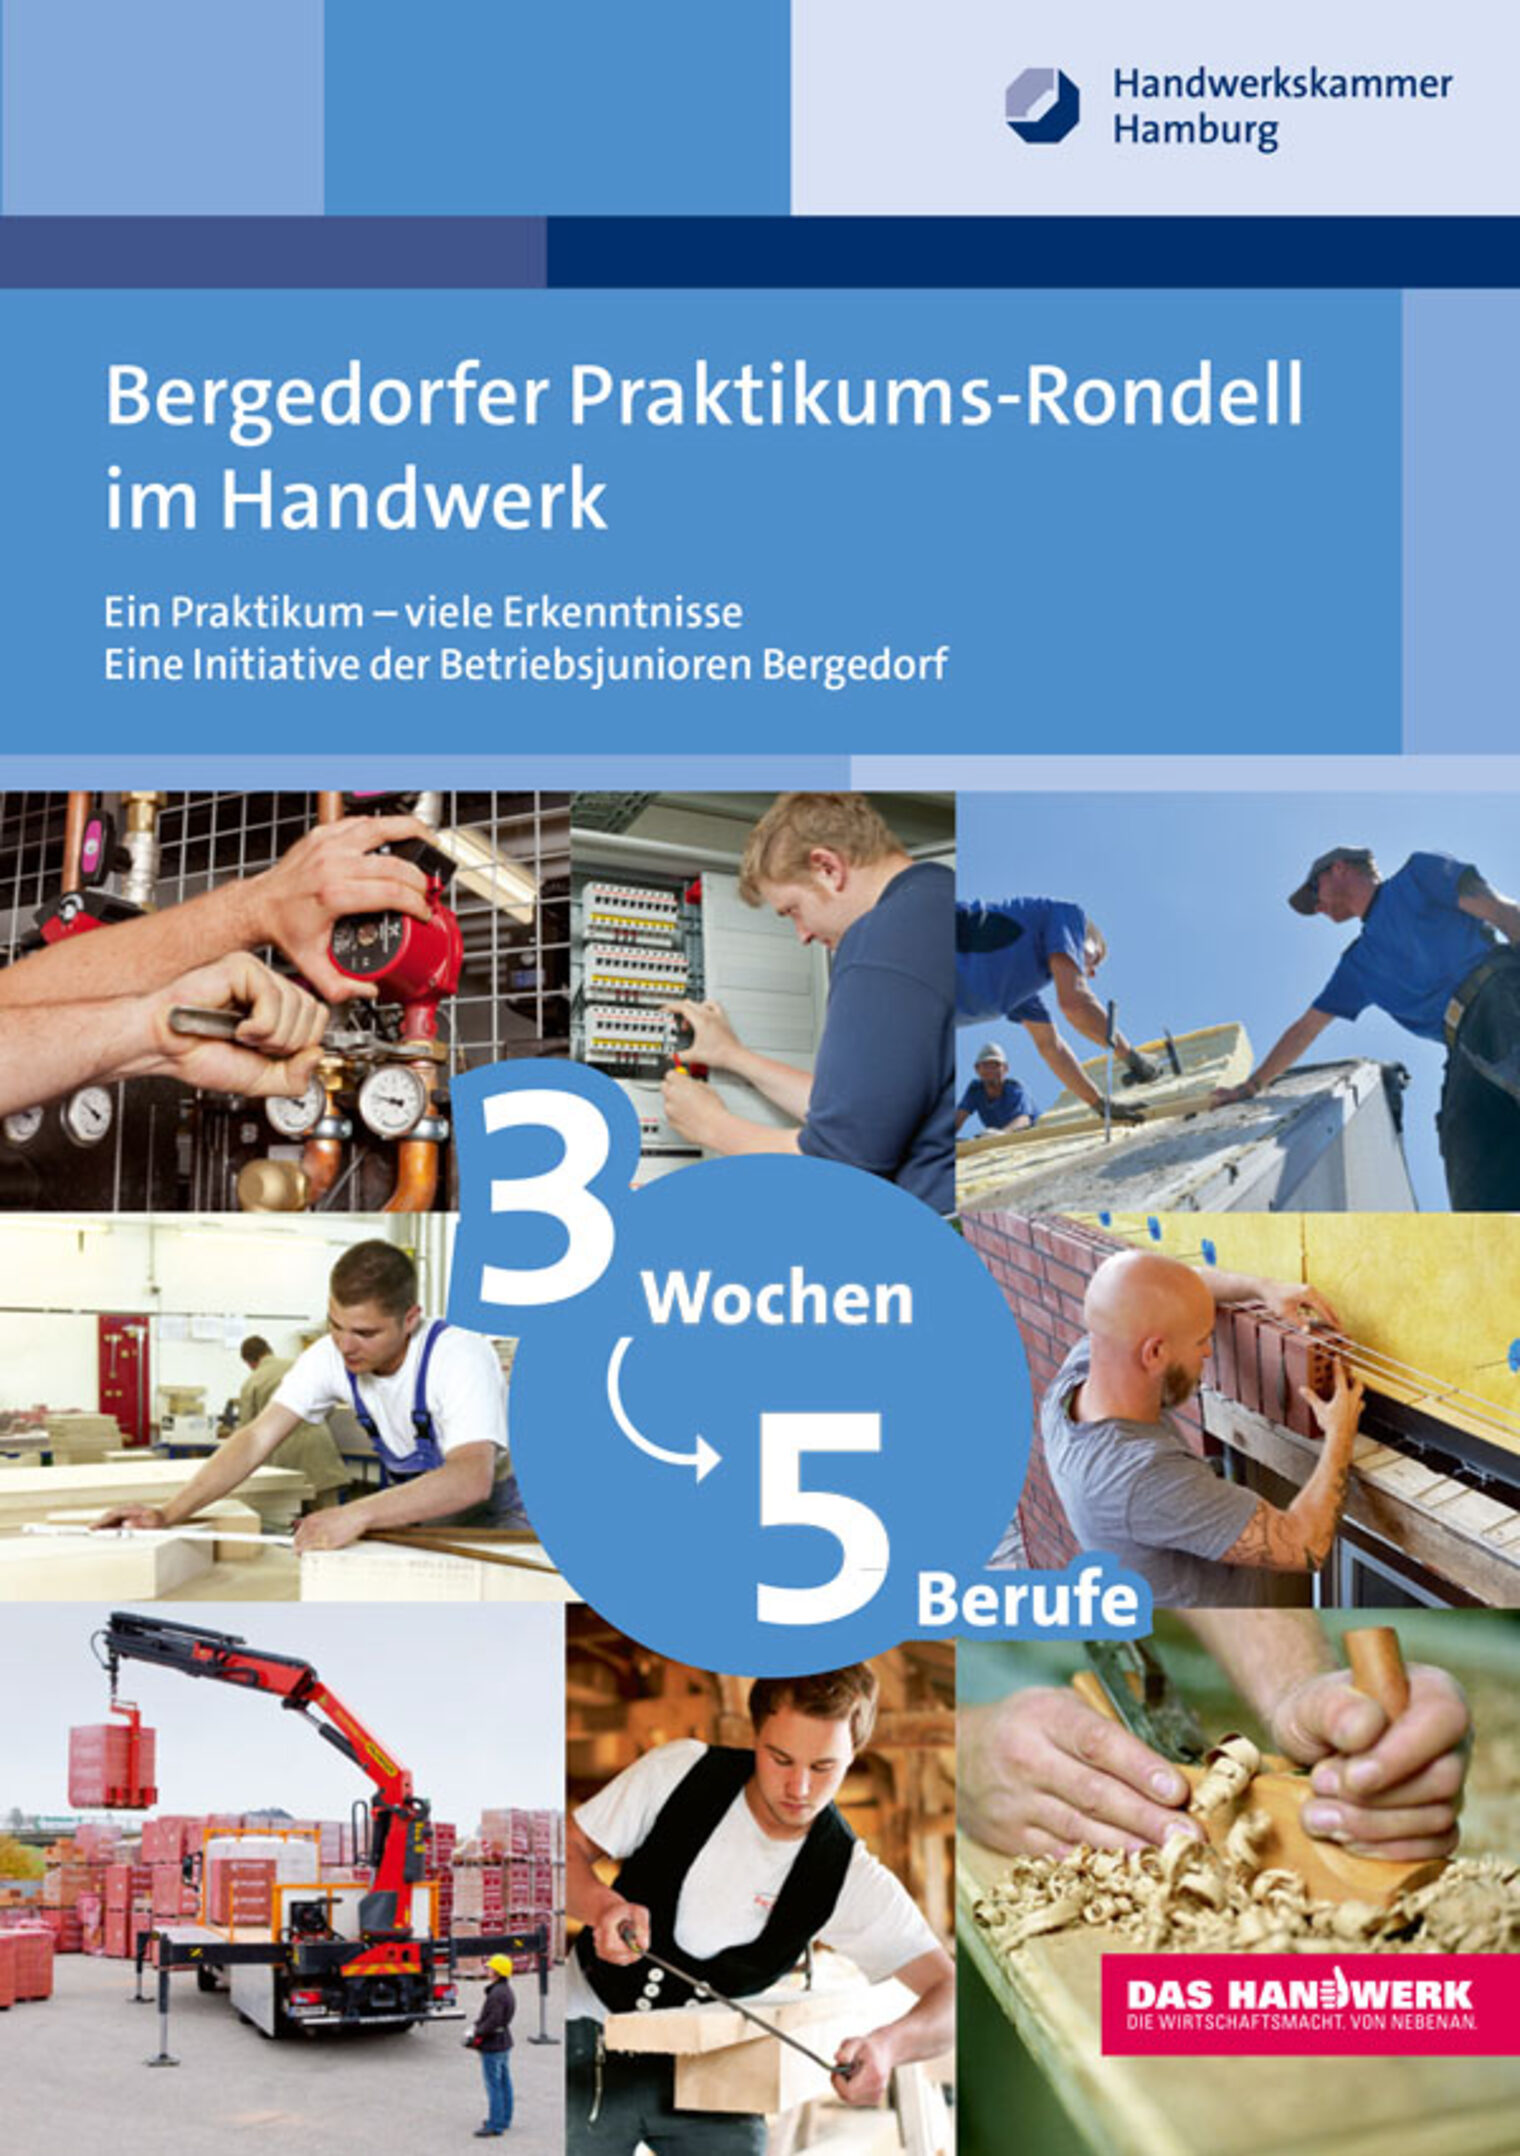 Bergerdorfer Praktikums-Rondell im Handwerk